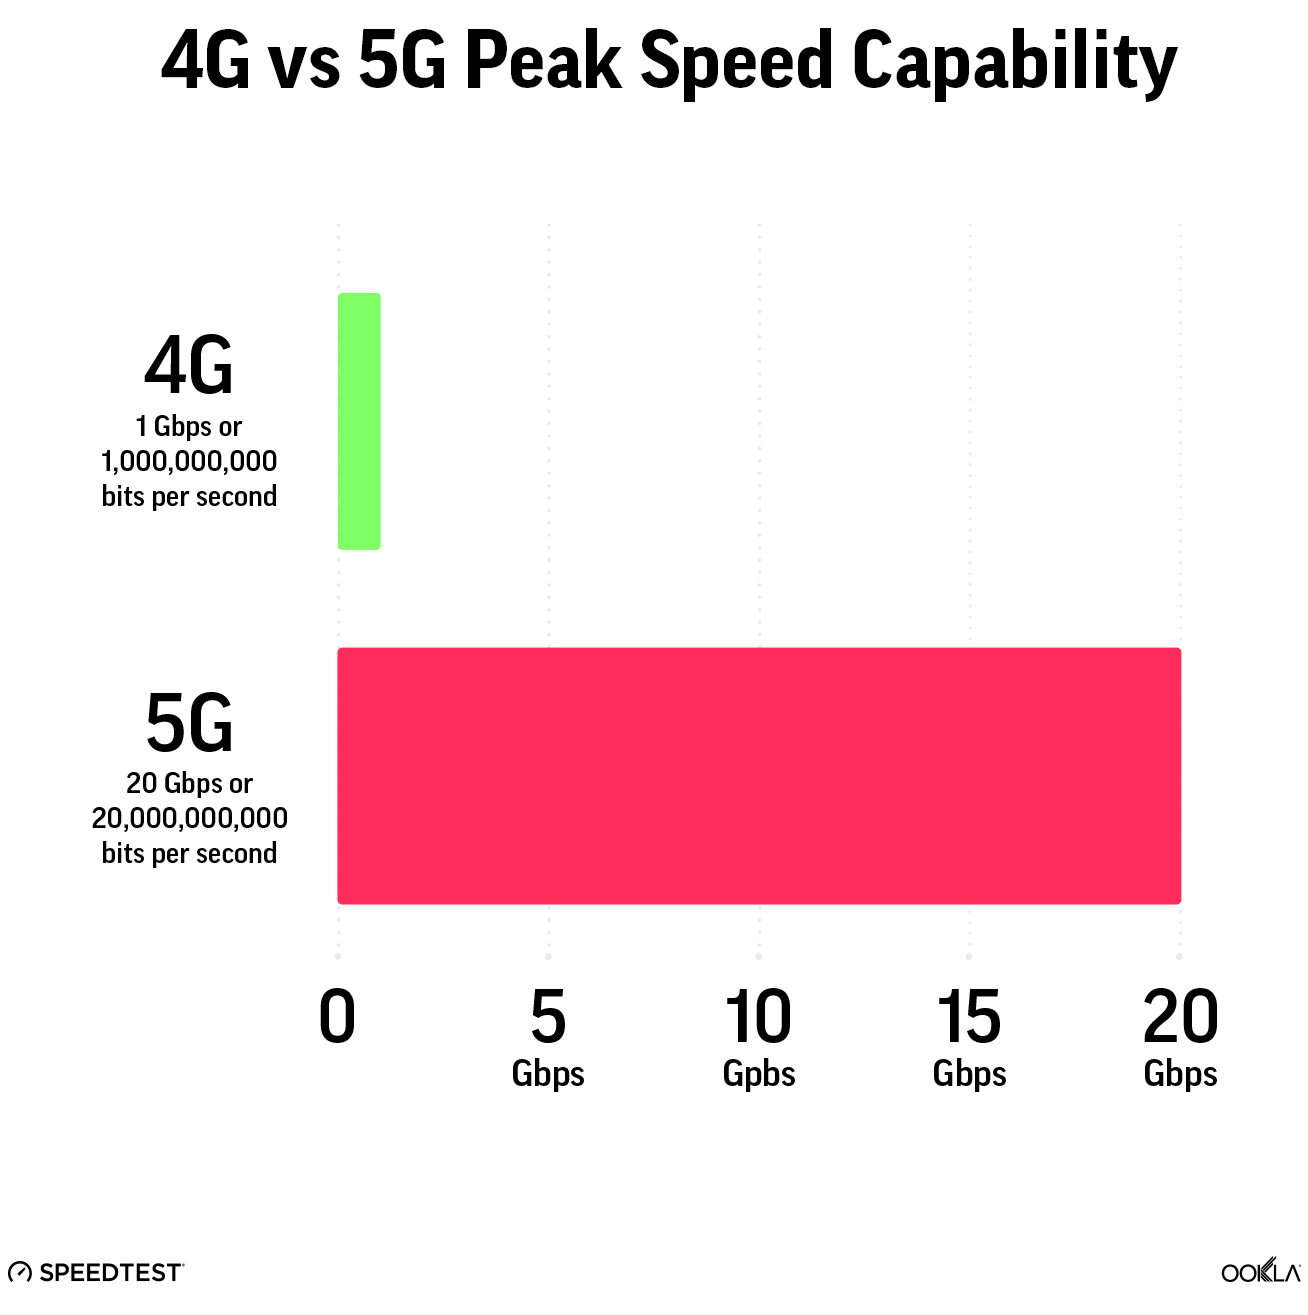 4G vs 5G Peak Speed Capability